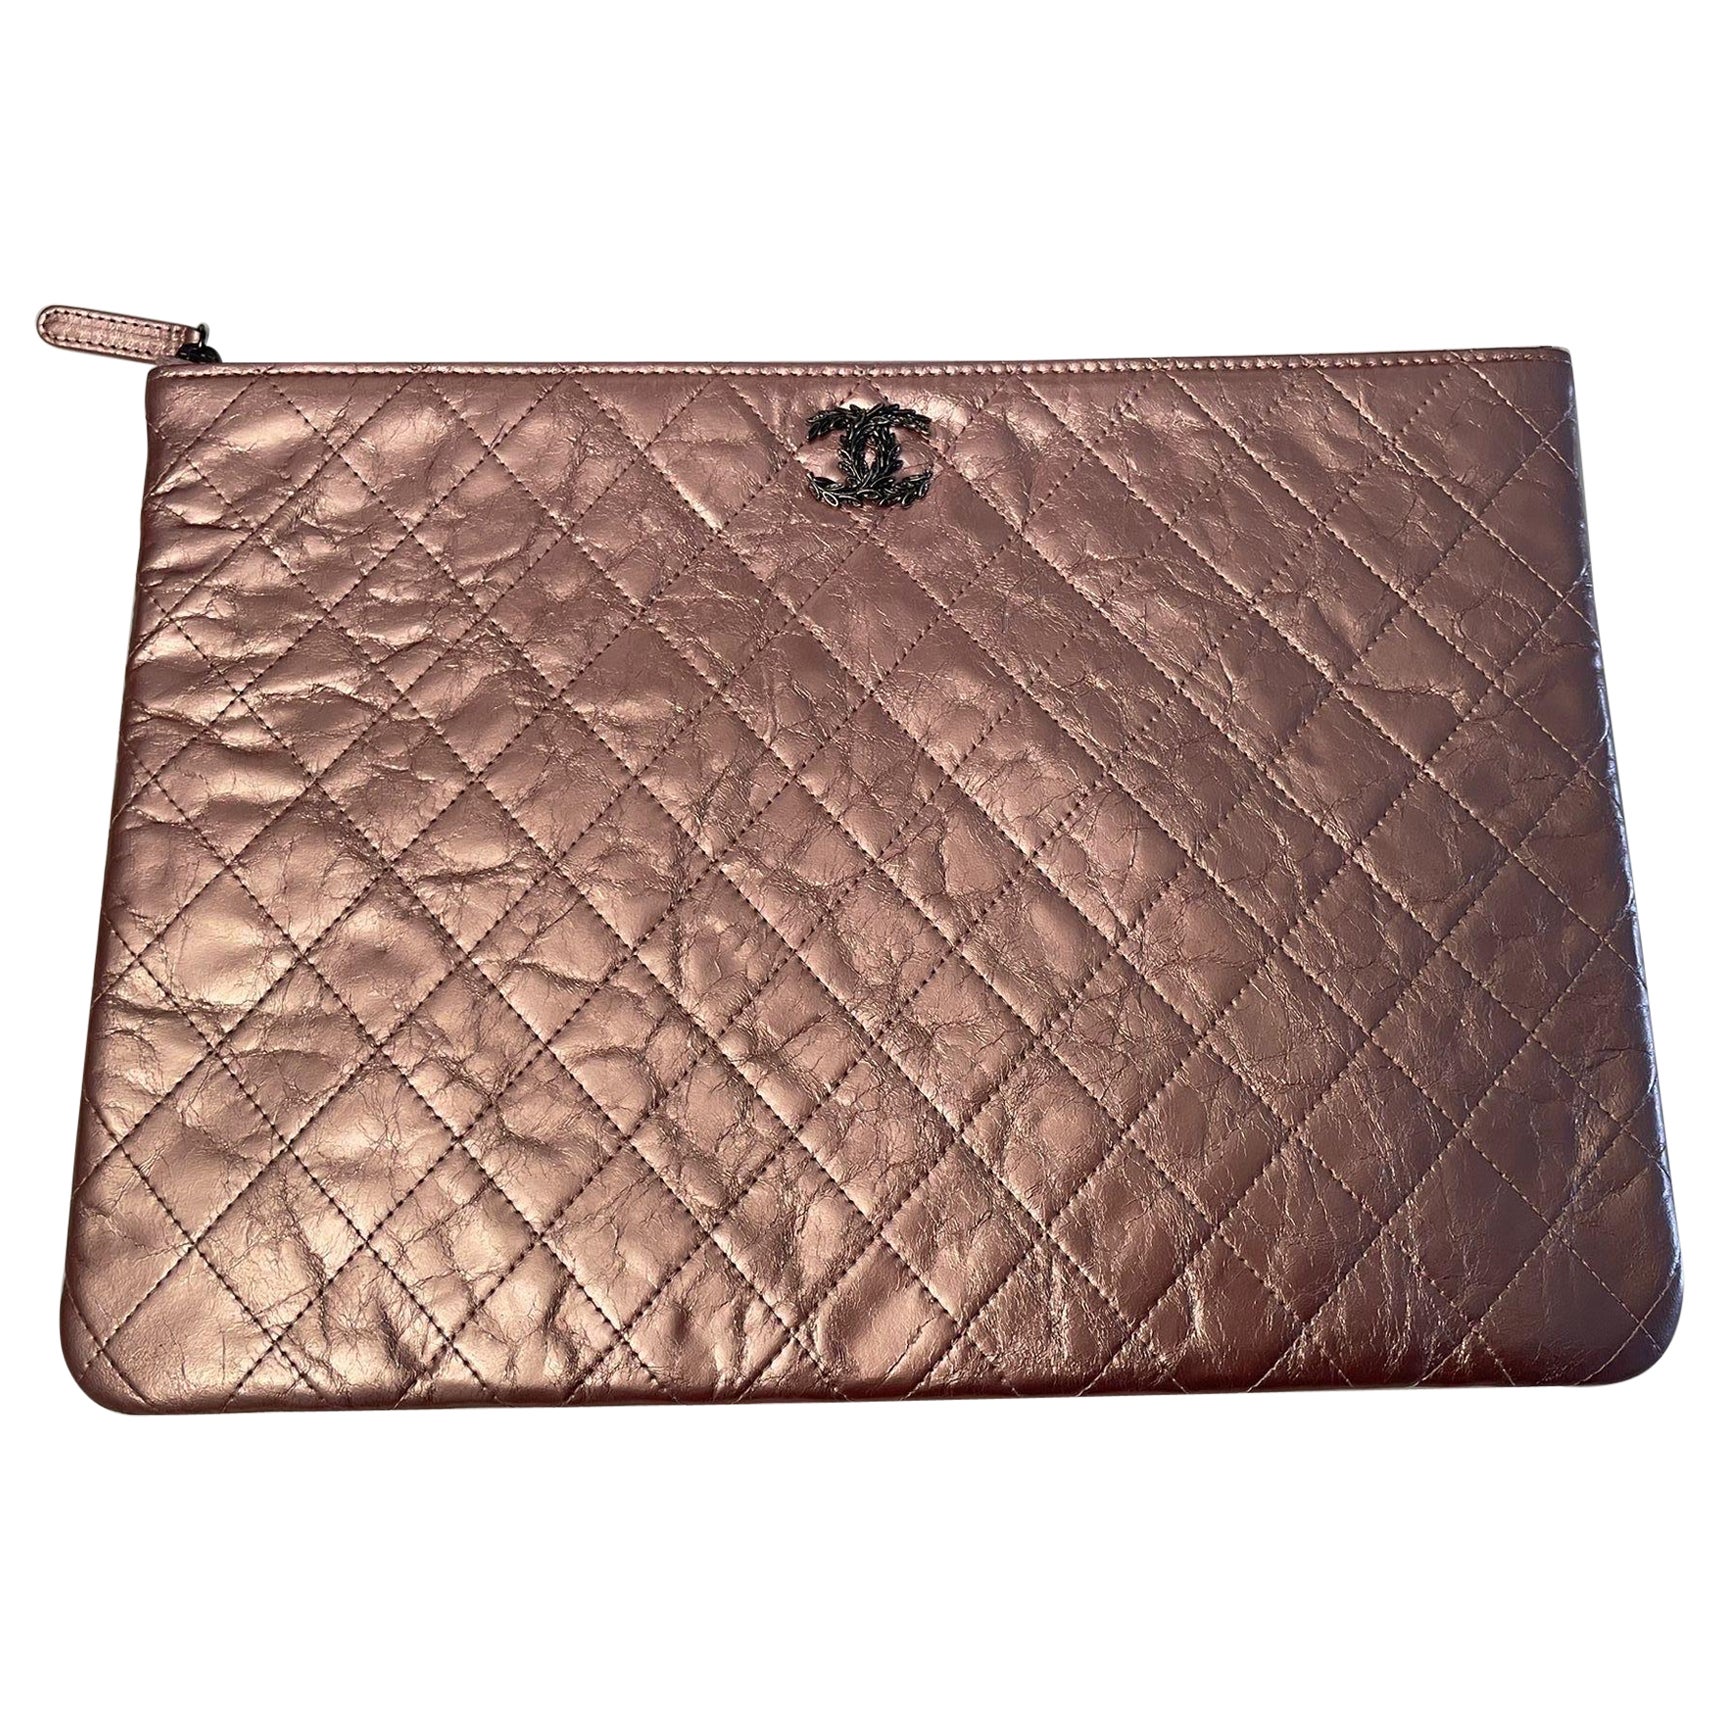 Chanel metallic pink clutch bag